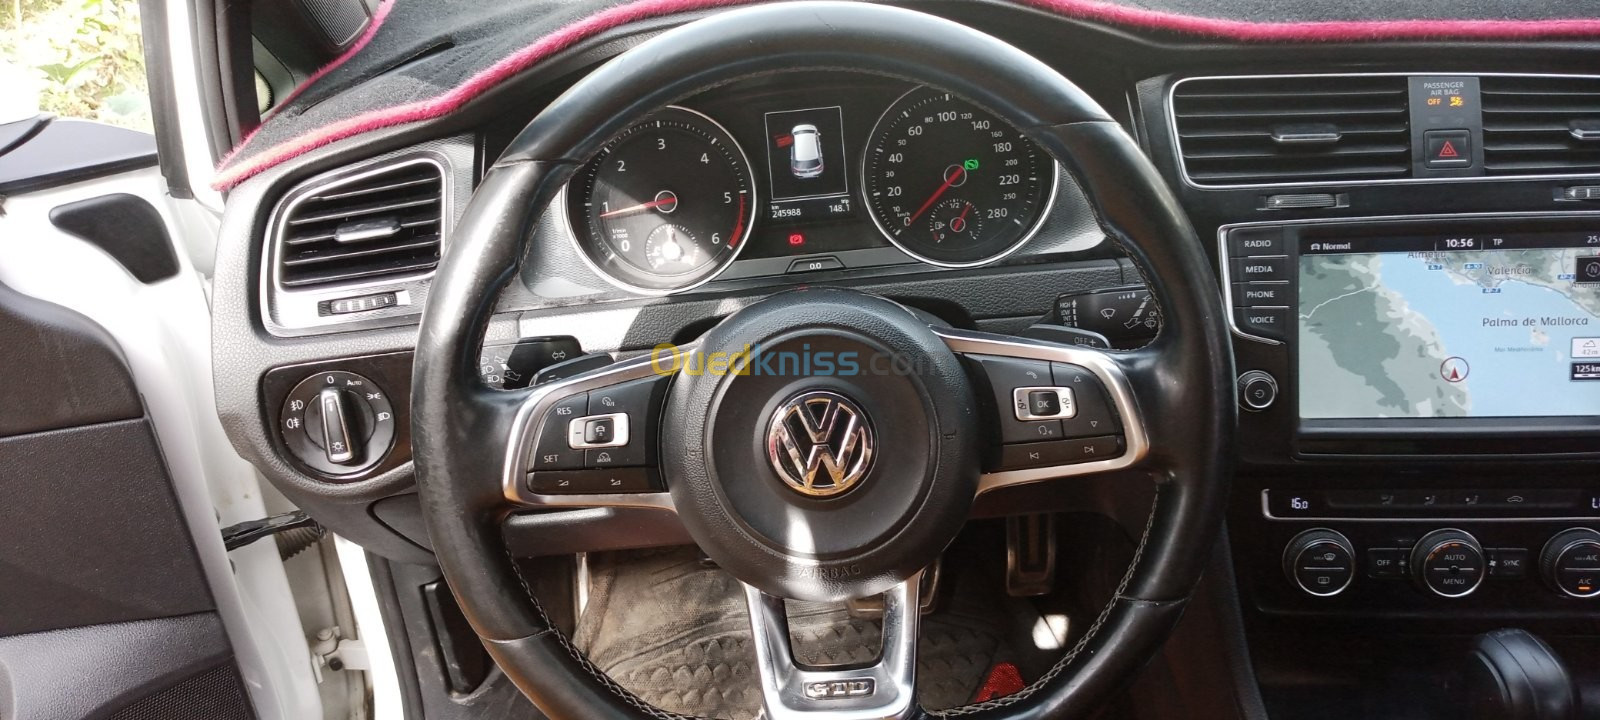 Volkswagen Golf 7 2016 GTD